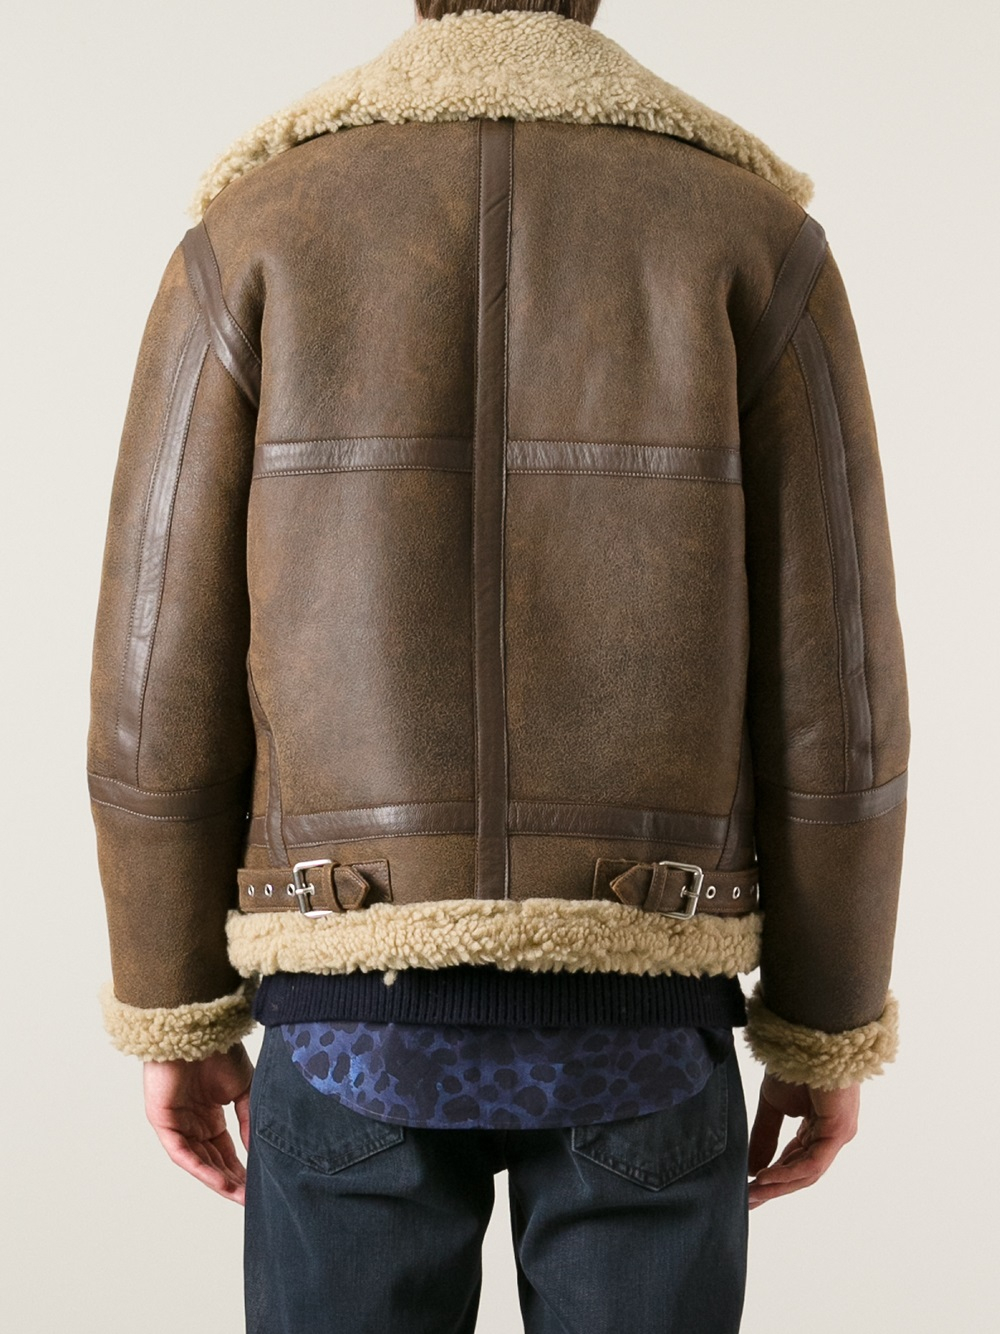 Lyst - Acne studios 'Ian Shearling' Jacket in Brown for Men